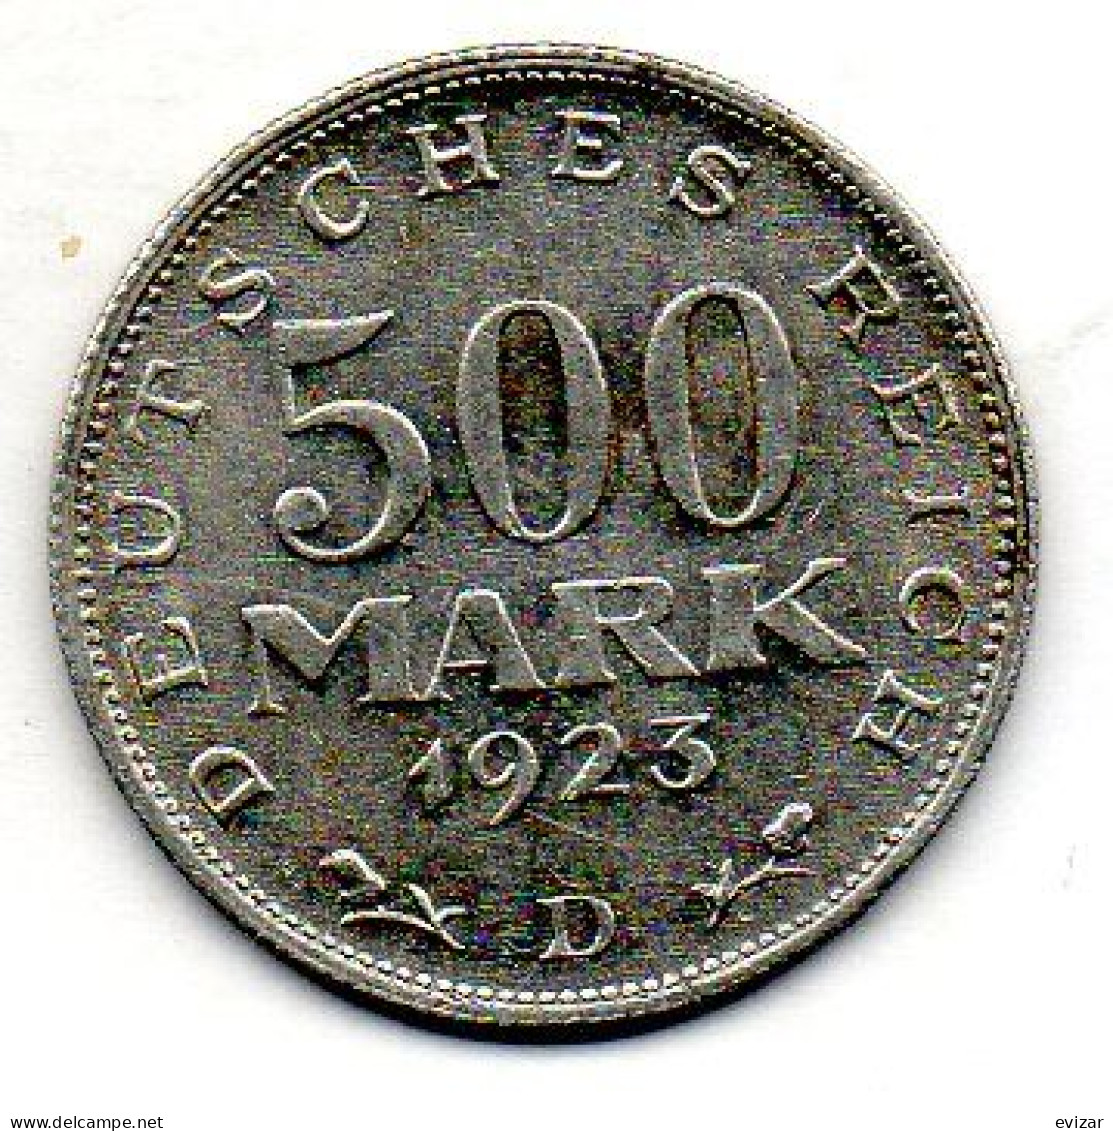 GERMANY - WEIMAR REPUBLIC, 500 Mark, Aluminum, Year 1923-D, KM # 36 - 200 & 500 Mark